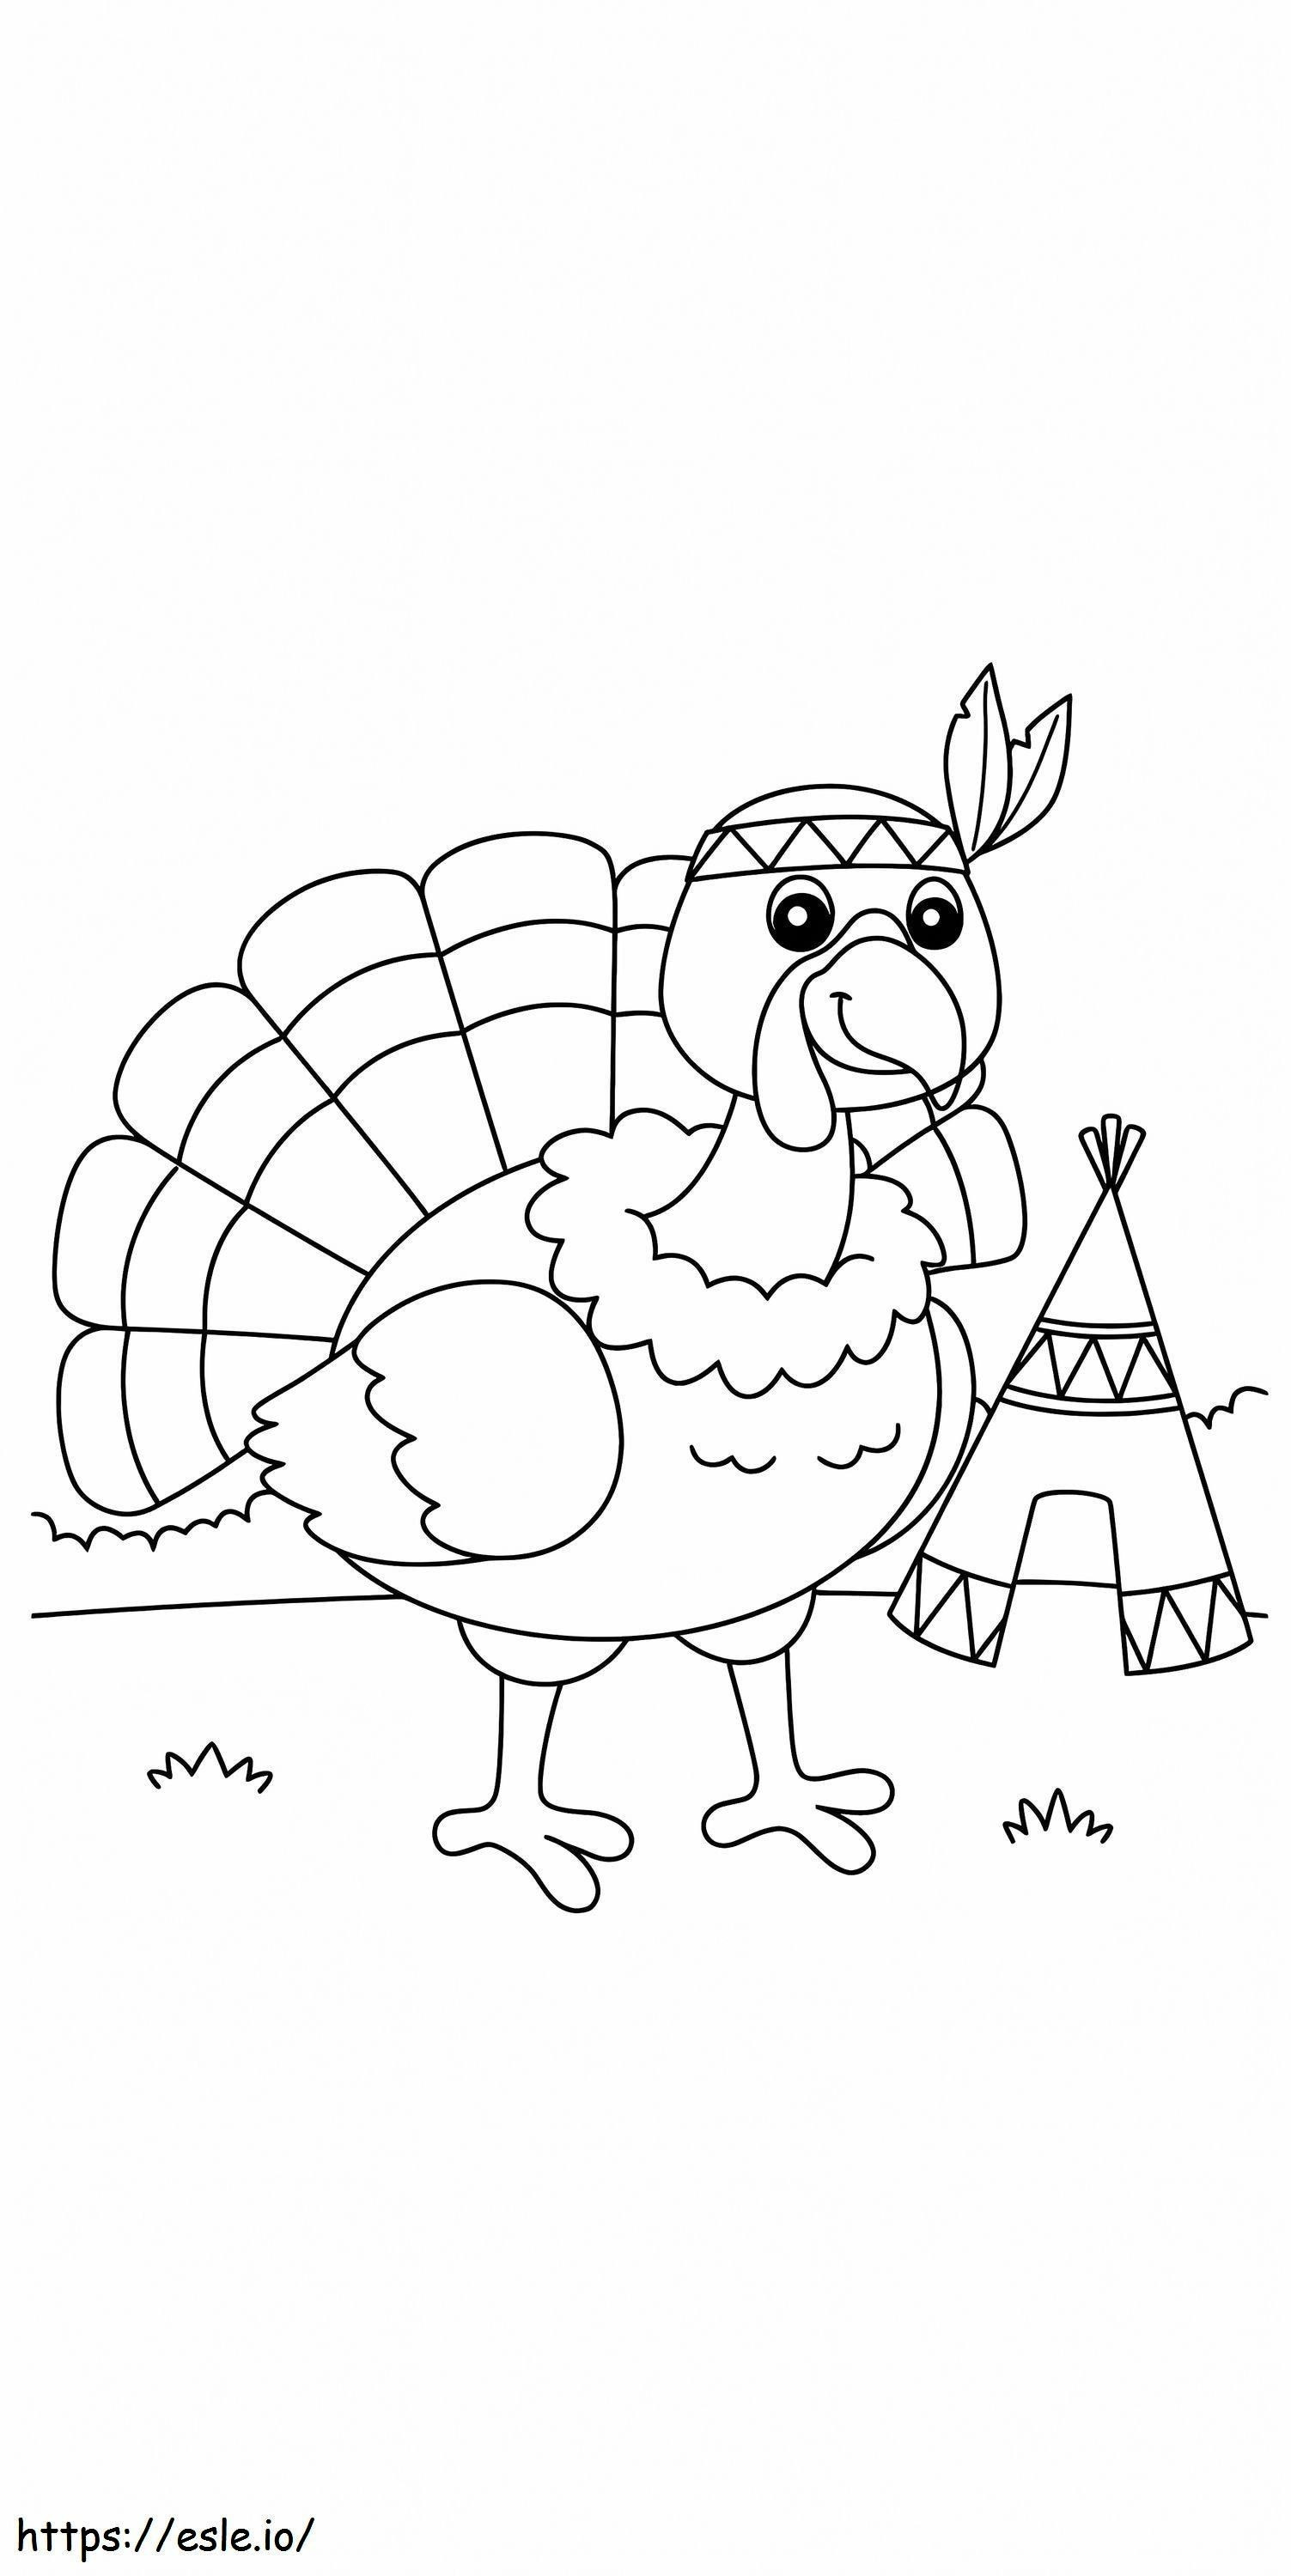 Best Turkey Printable coloring page